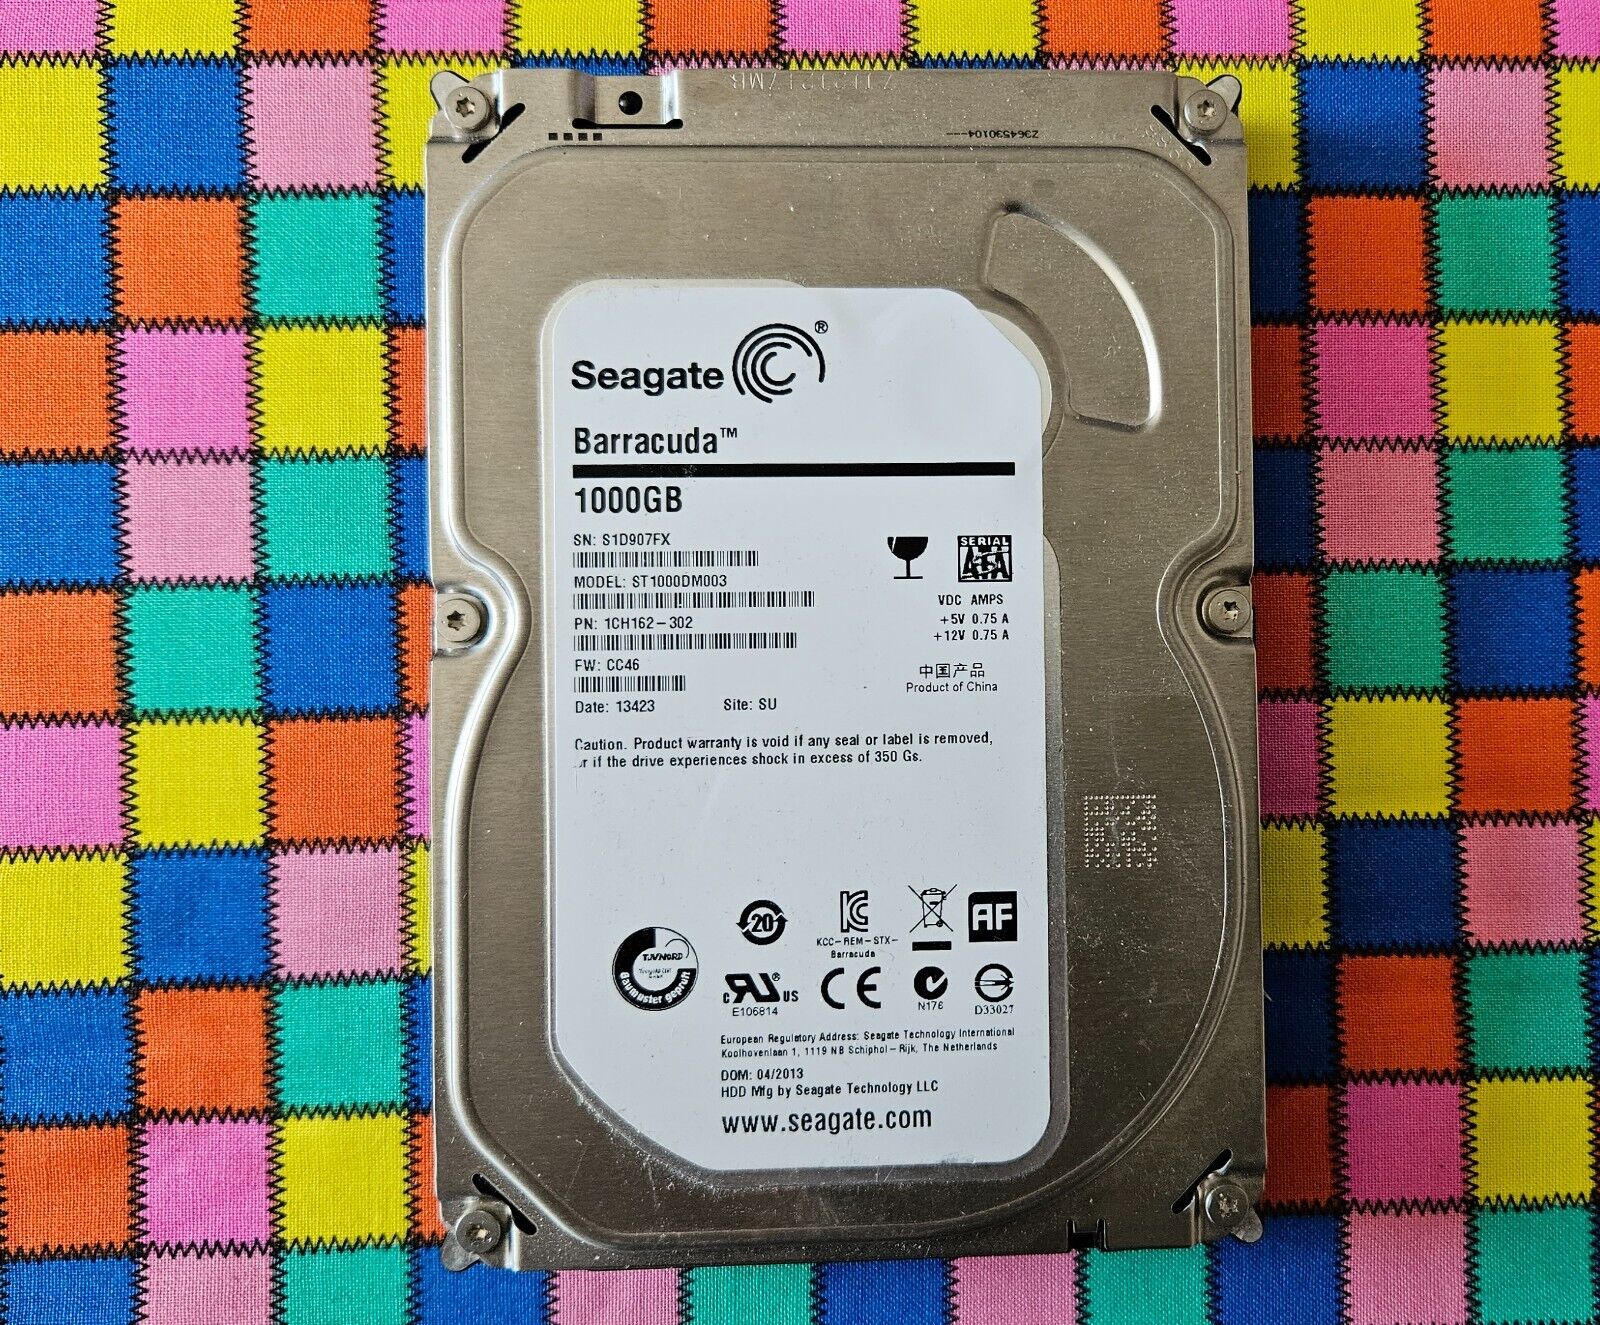 Seagate Barracuda, 1000GB, Model # ST1000DM003 - Hard Disk Drive (HDD) - USED